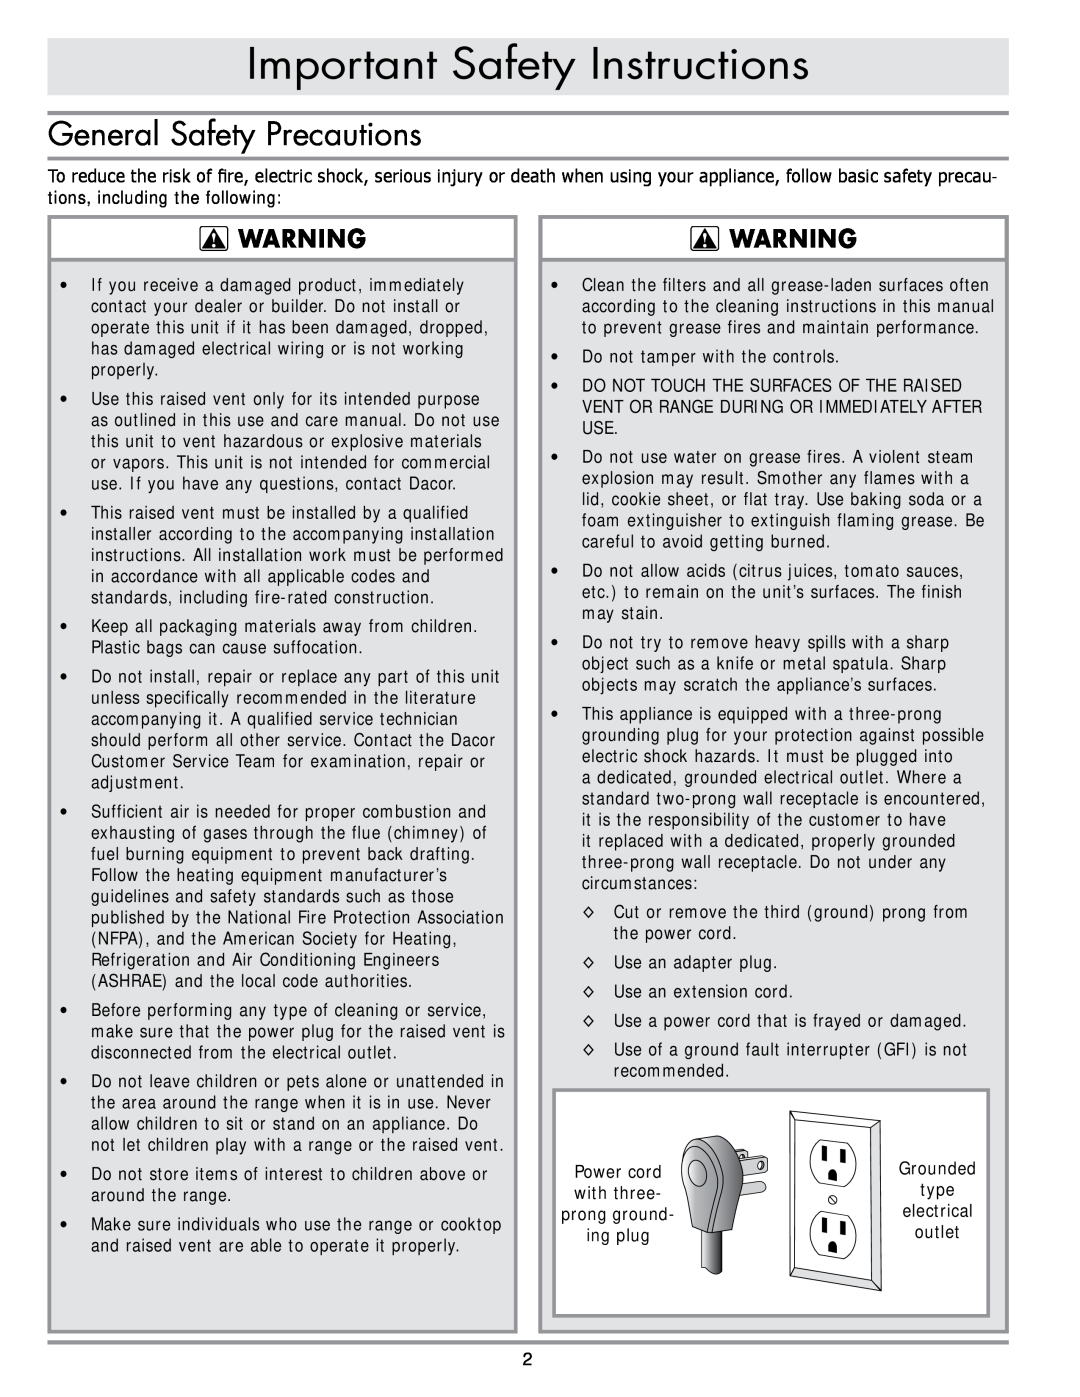 Dacor RV46, RV36, RV30 important safety instructions General Safety Precautions, Important Safety Instructions 